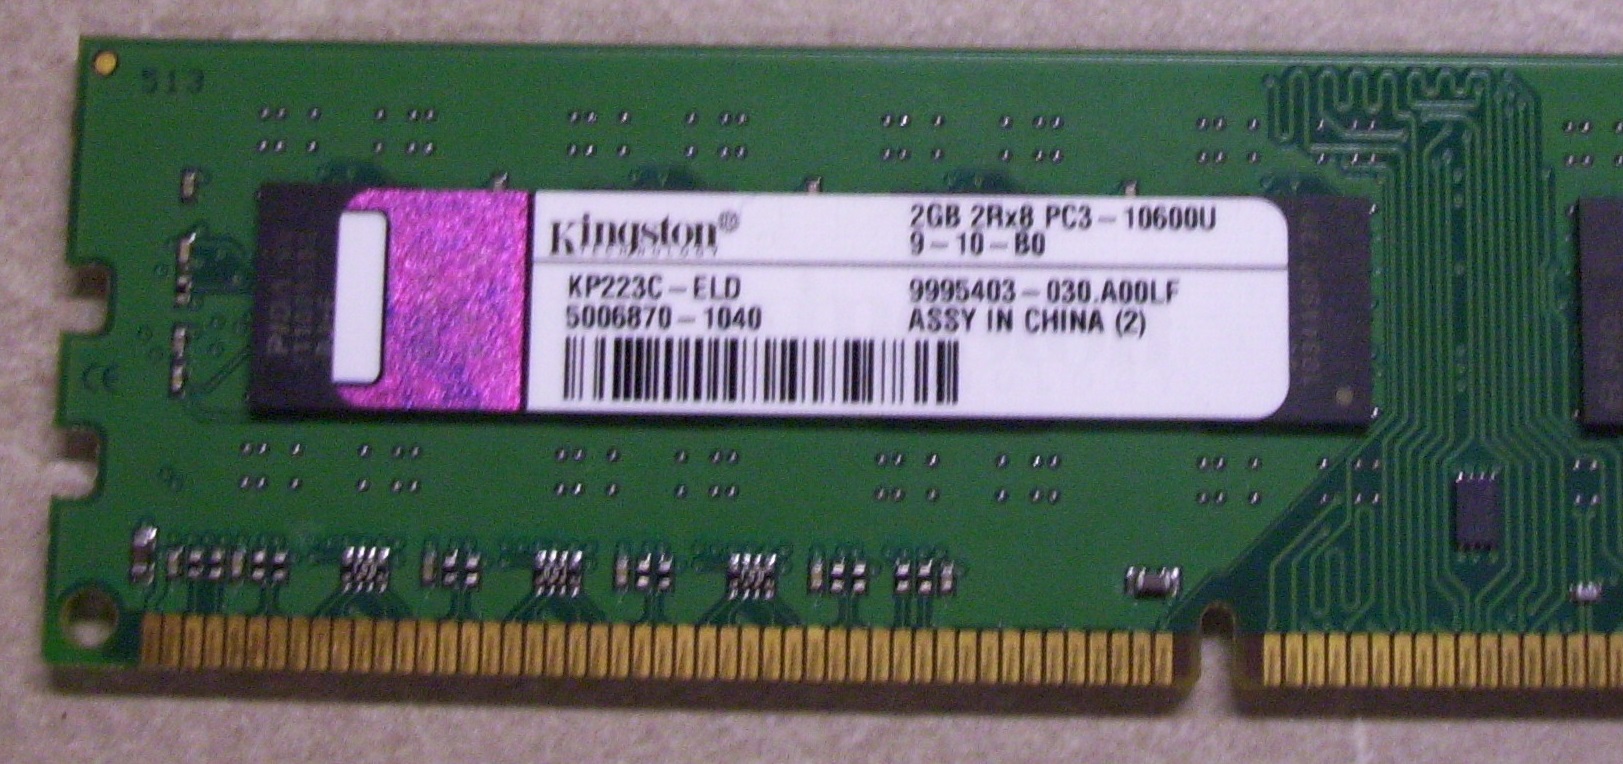 s5150t with Eureka3 IPIEL-LA3 motherboard memory problem - HP Support  Community - 1918003